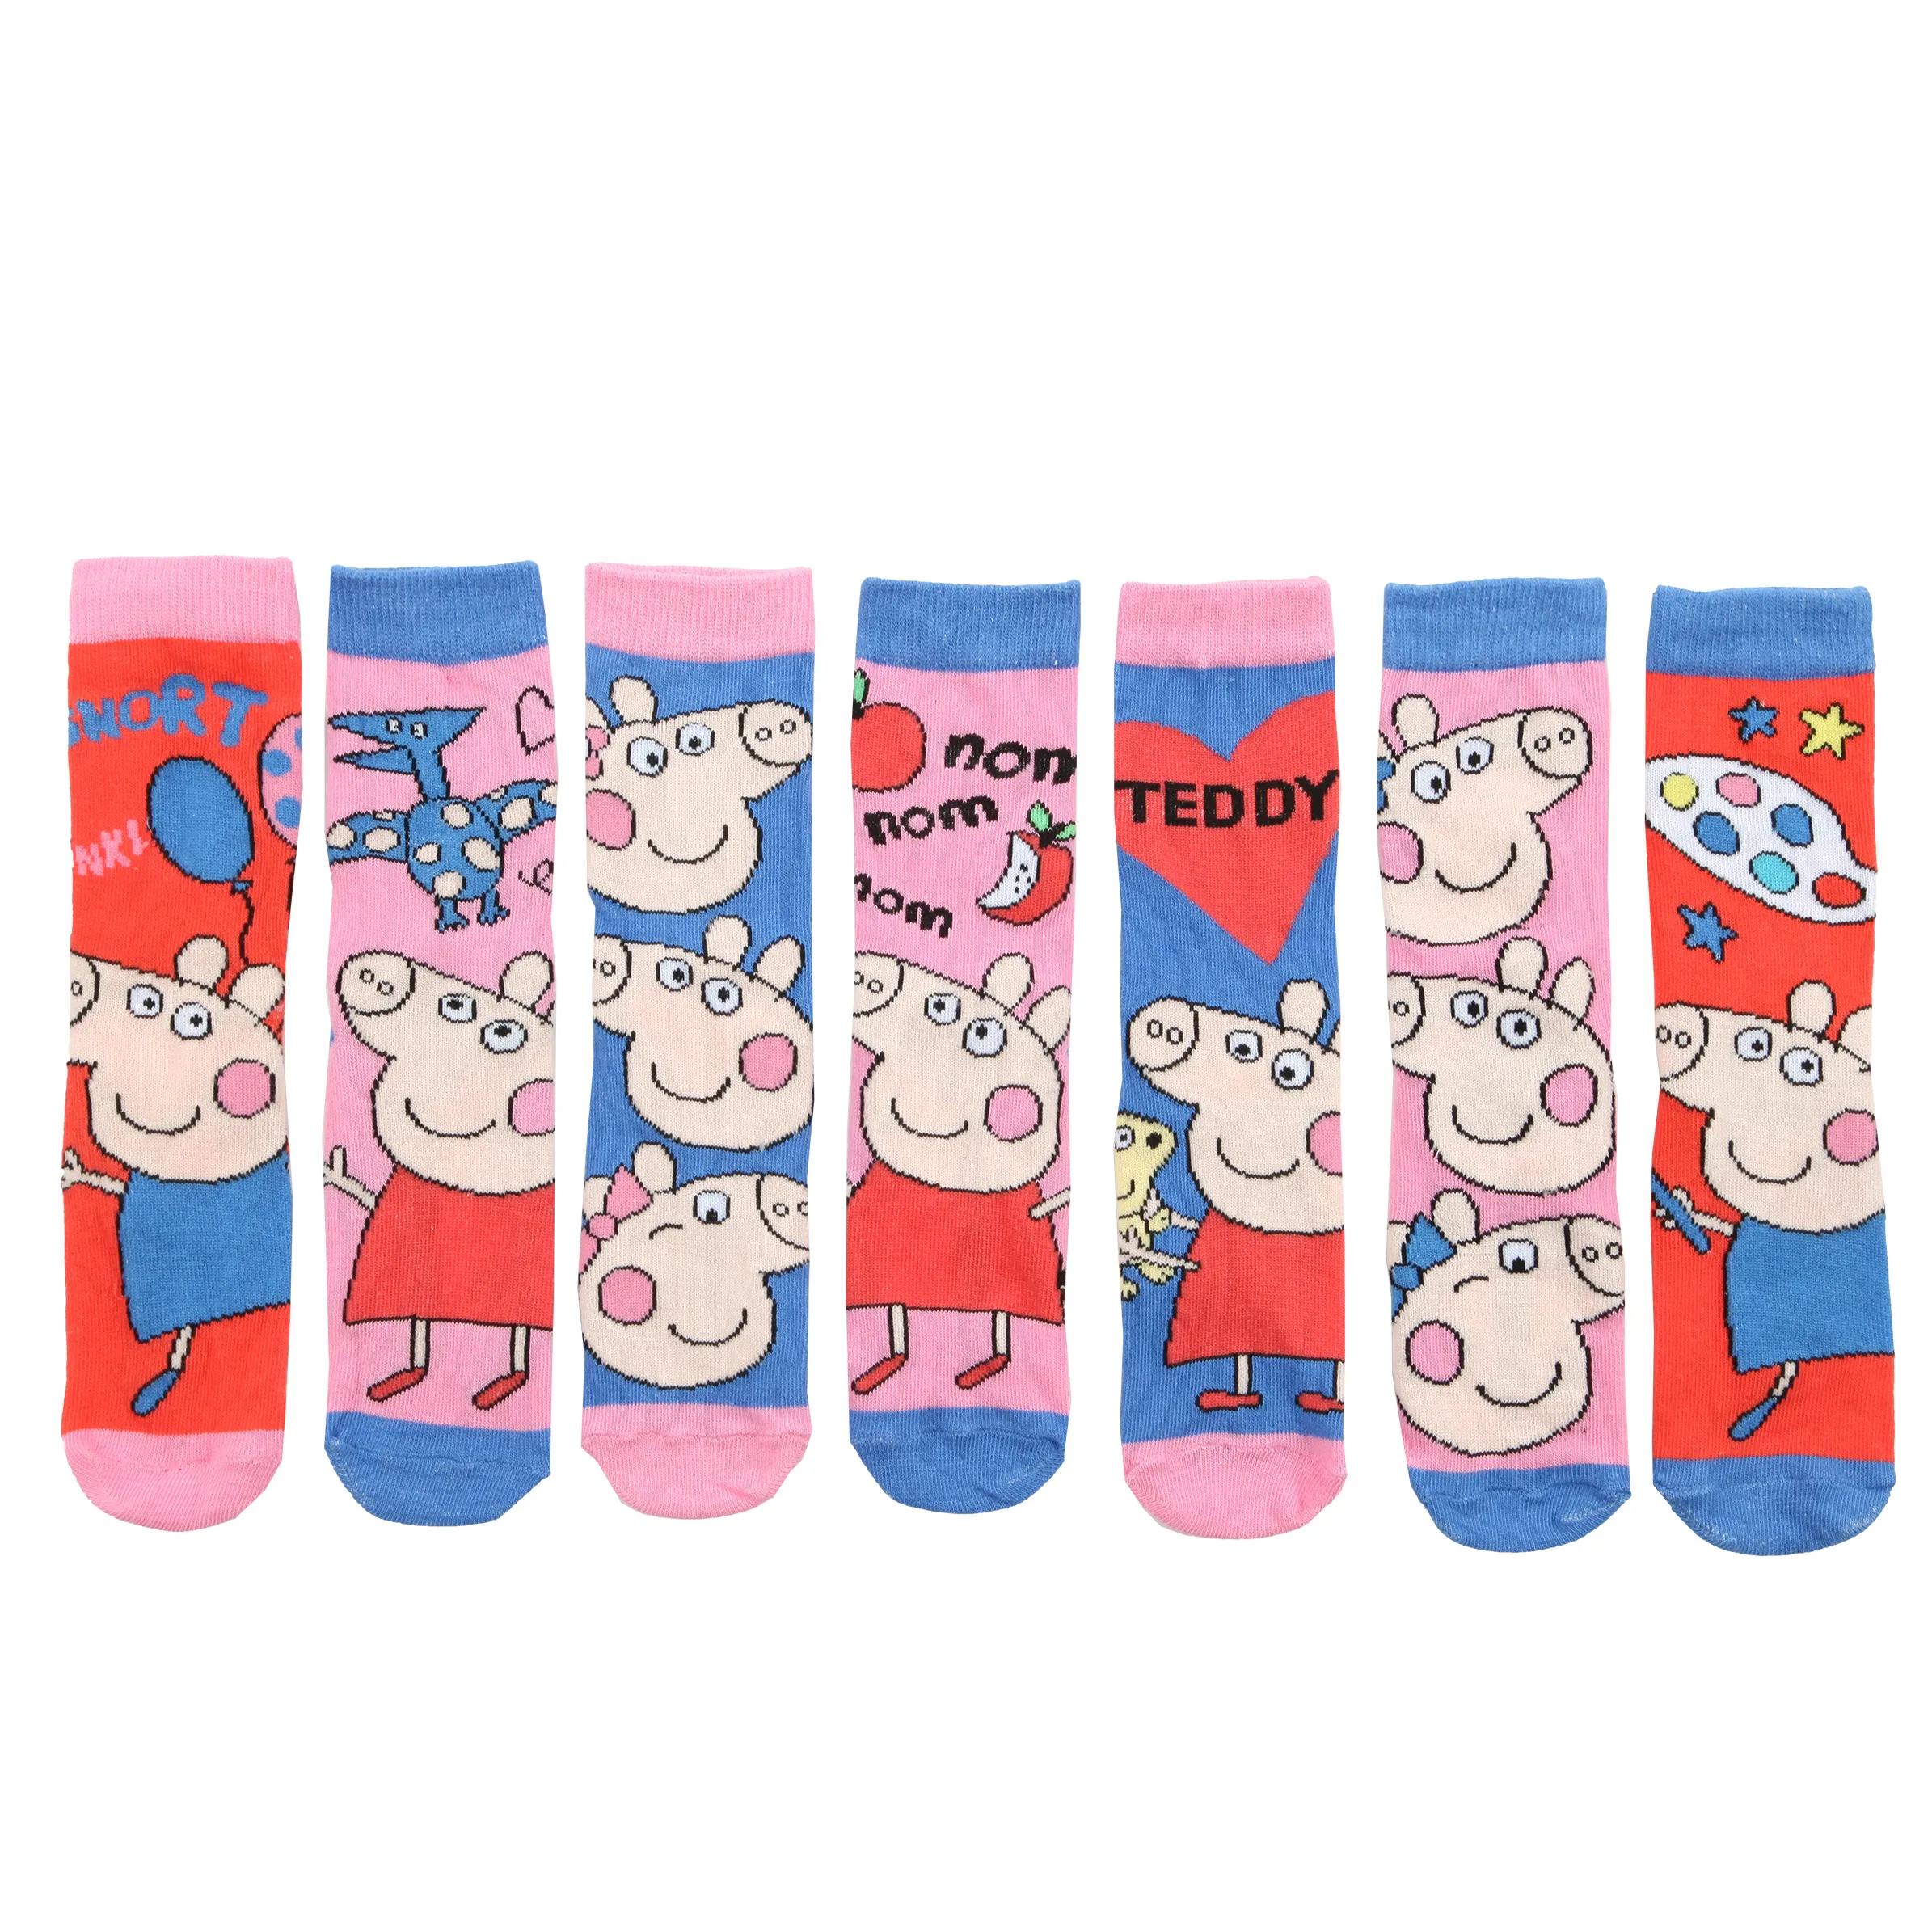 Peppa Pig KM Socken 7er Pack Peppa Pig Bunt 886113 PINK 2